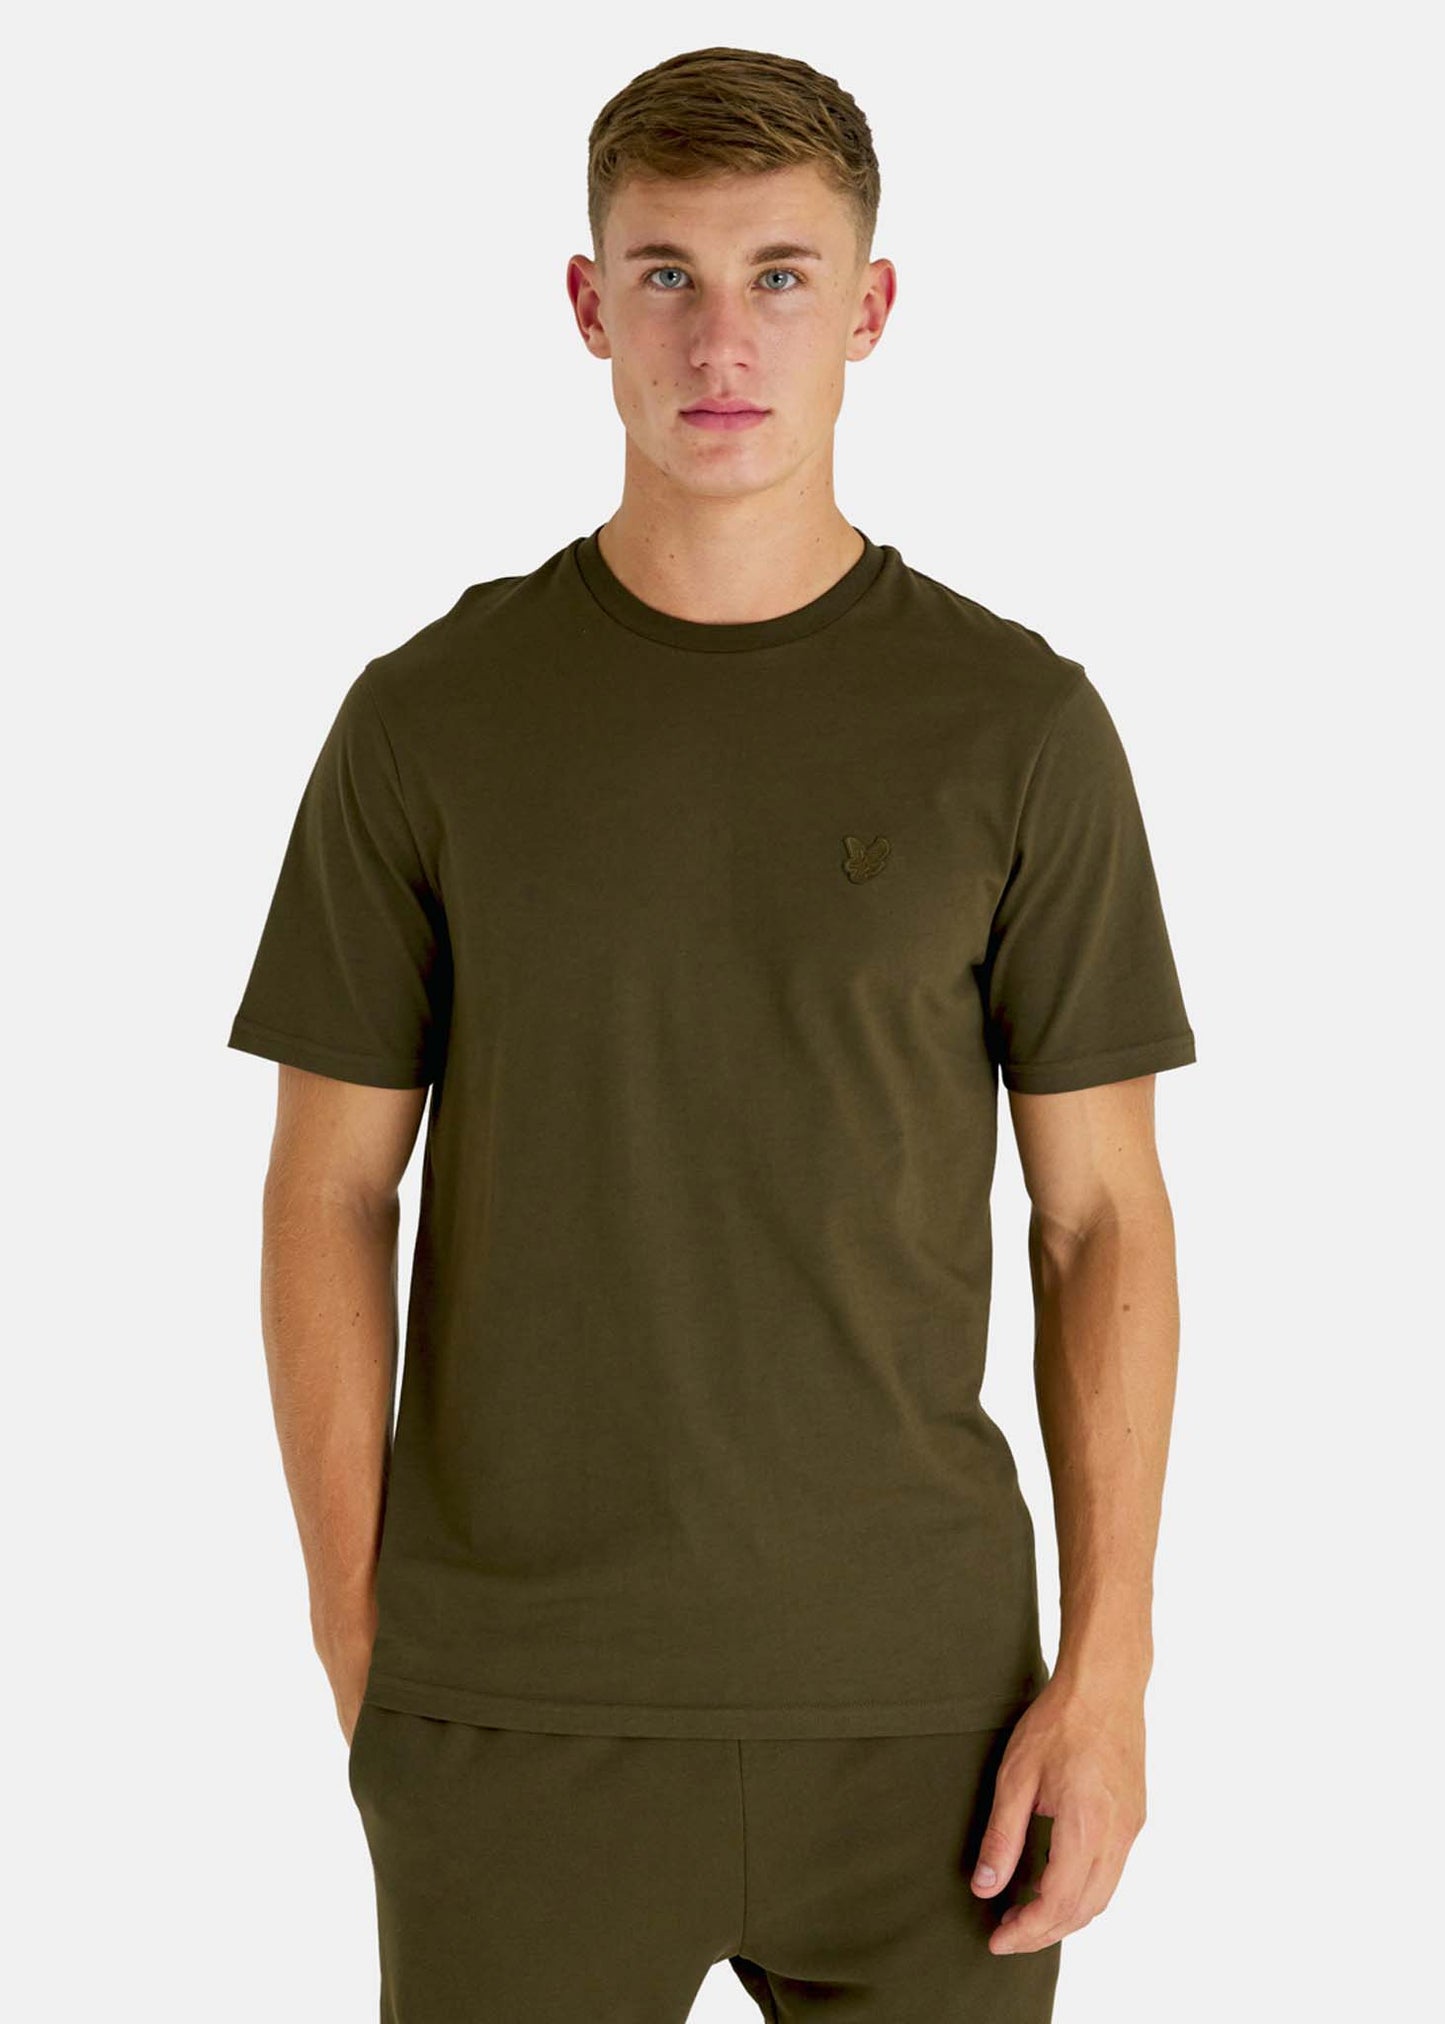 Tonal eagle t-shirt - olive